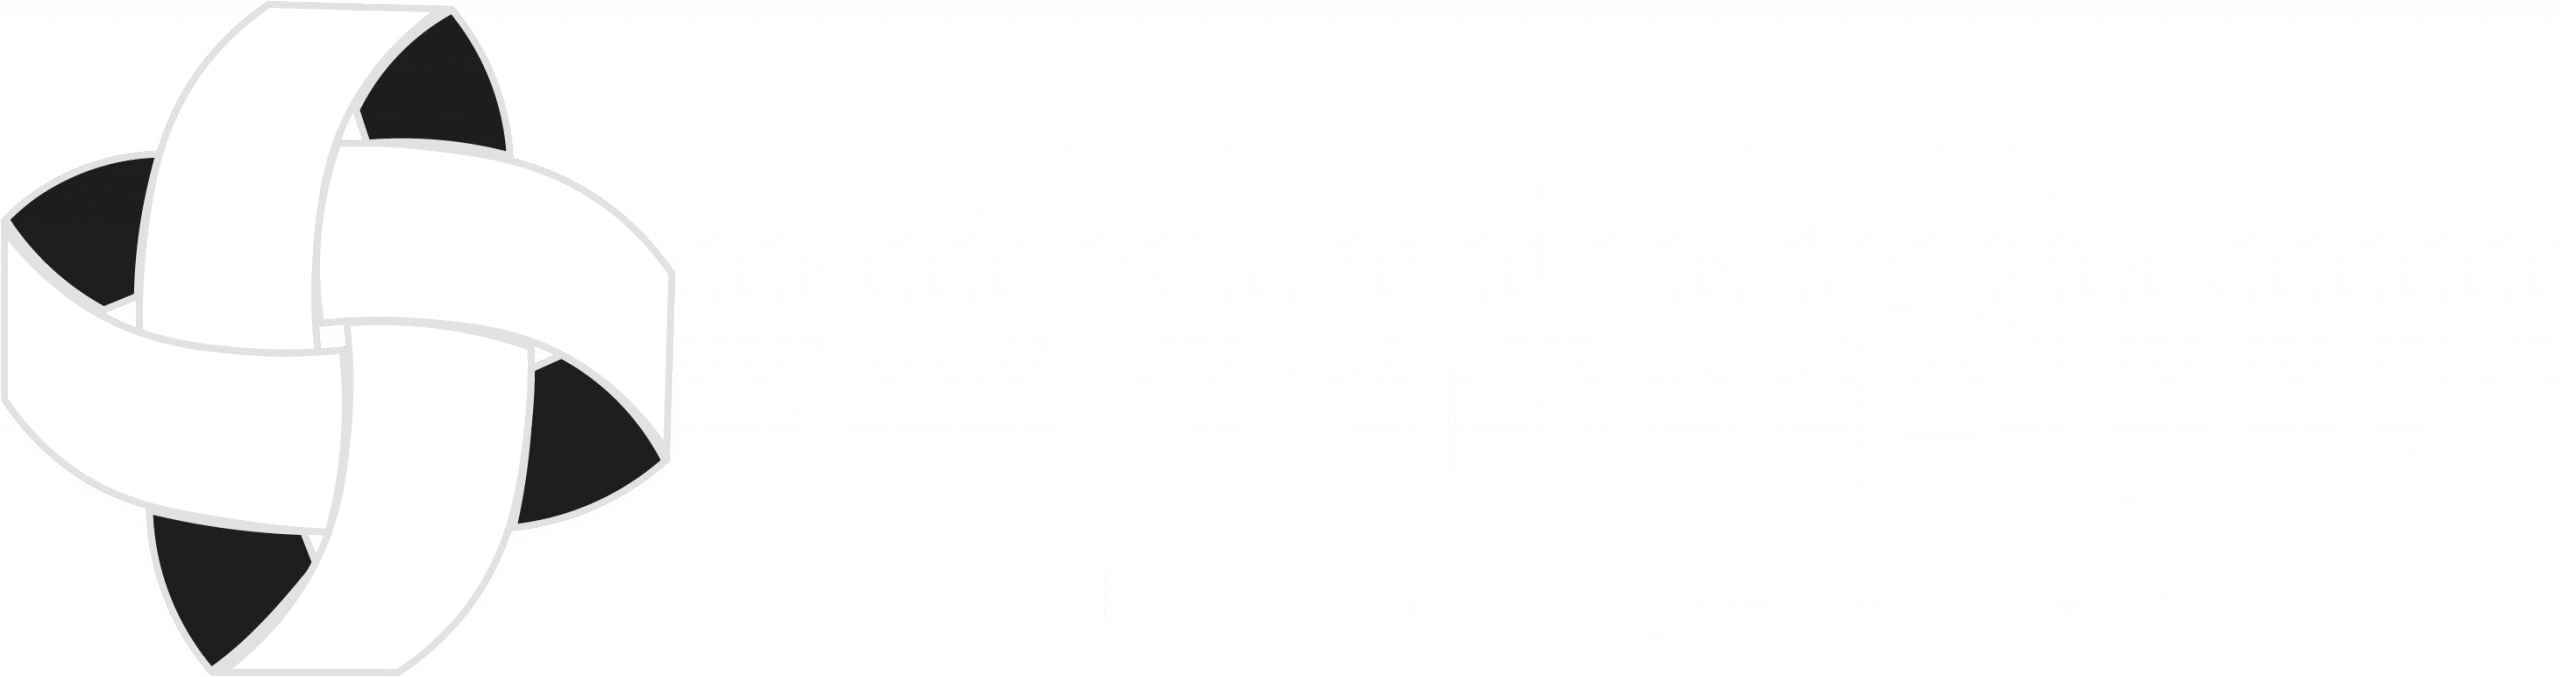 Platinum Creditplus Lending Corp.Seafarer’s Loan